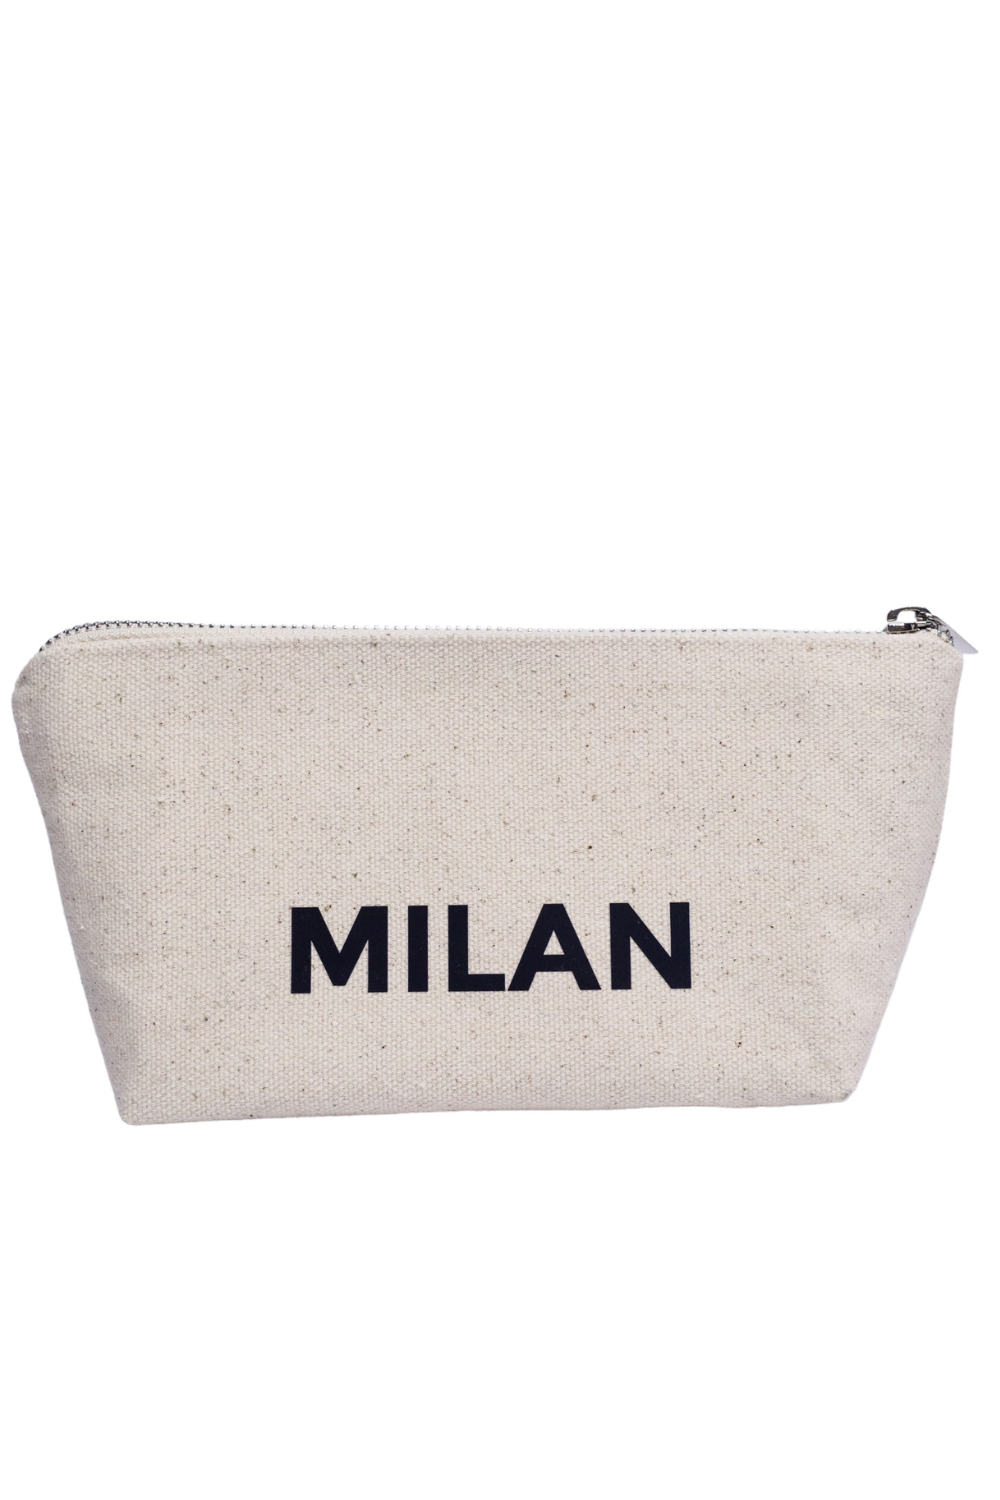 Eco-cotton cosmetic bag white M Milan 02SM01